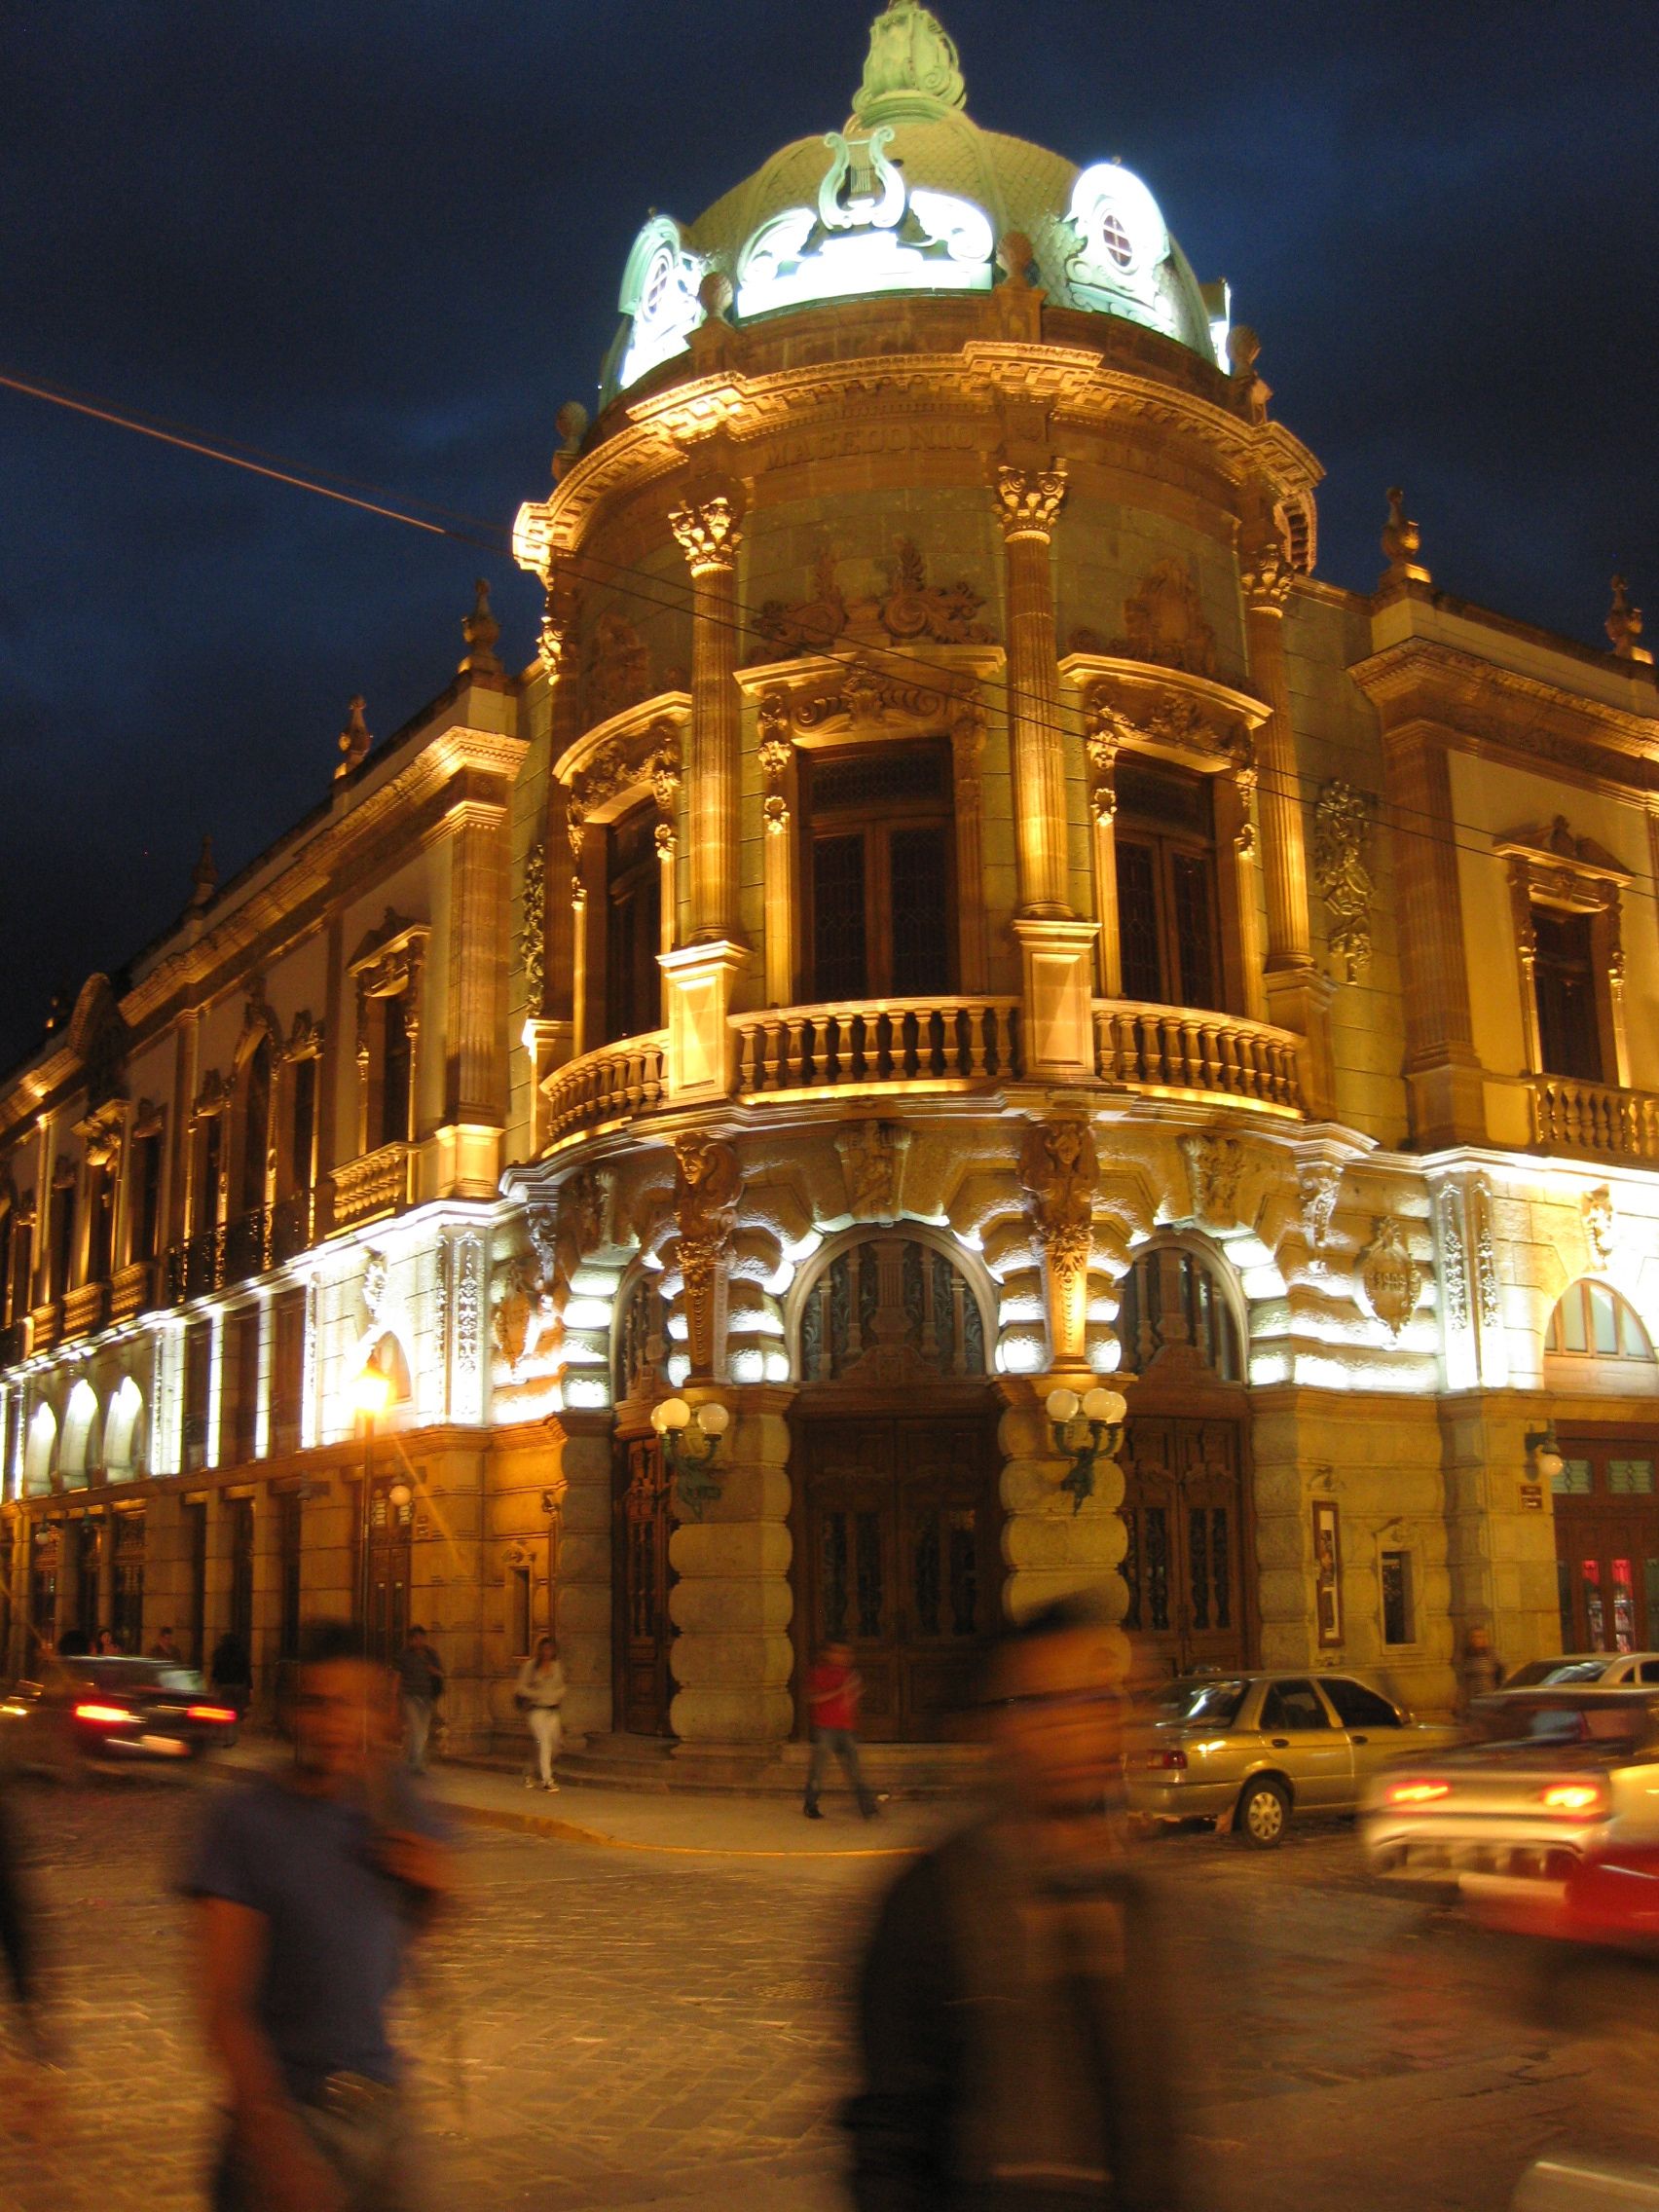 The main theatre in Oaxaca